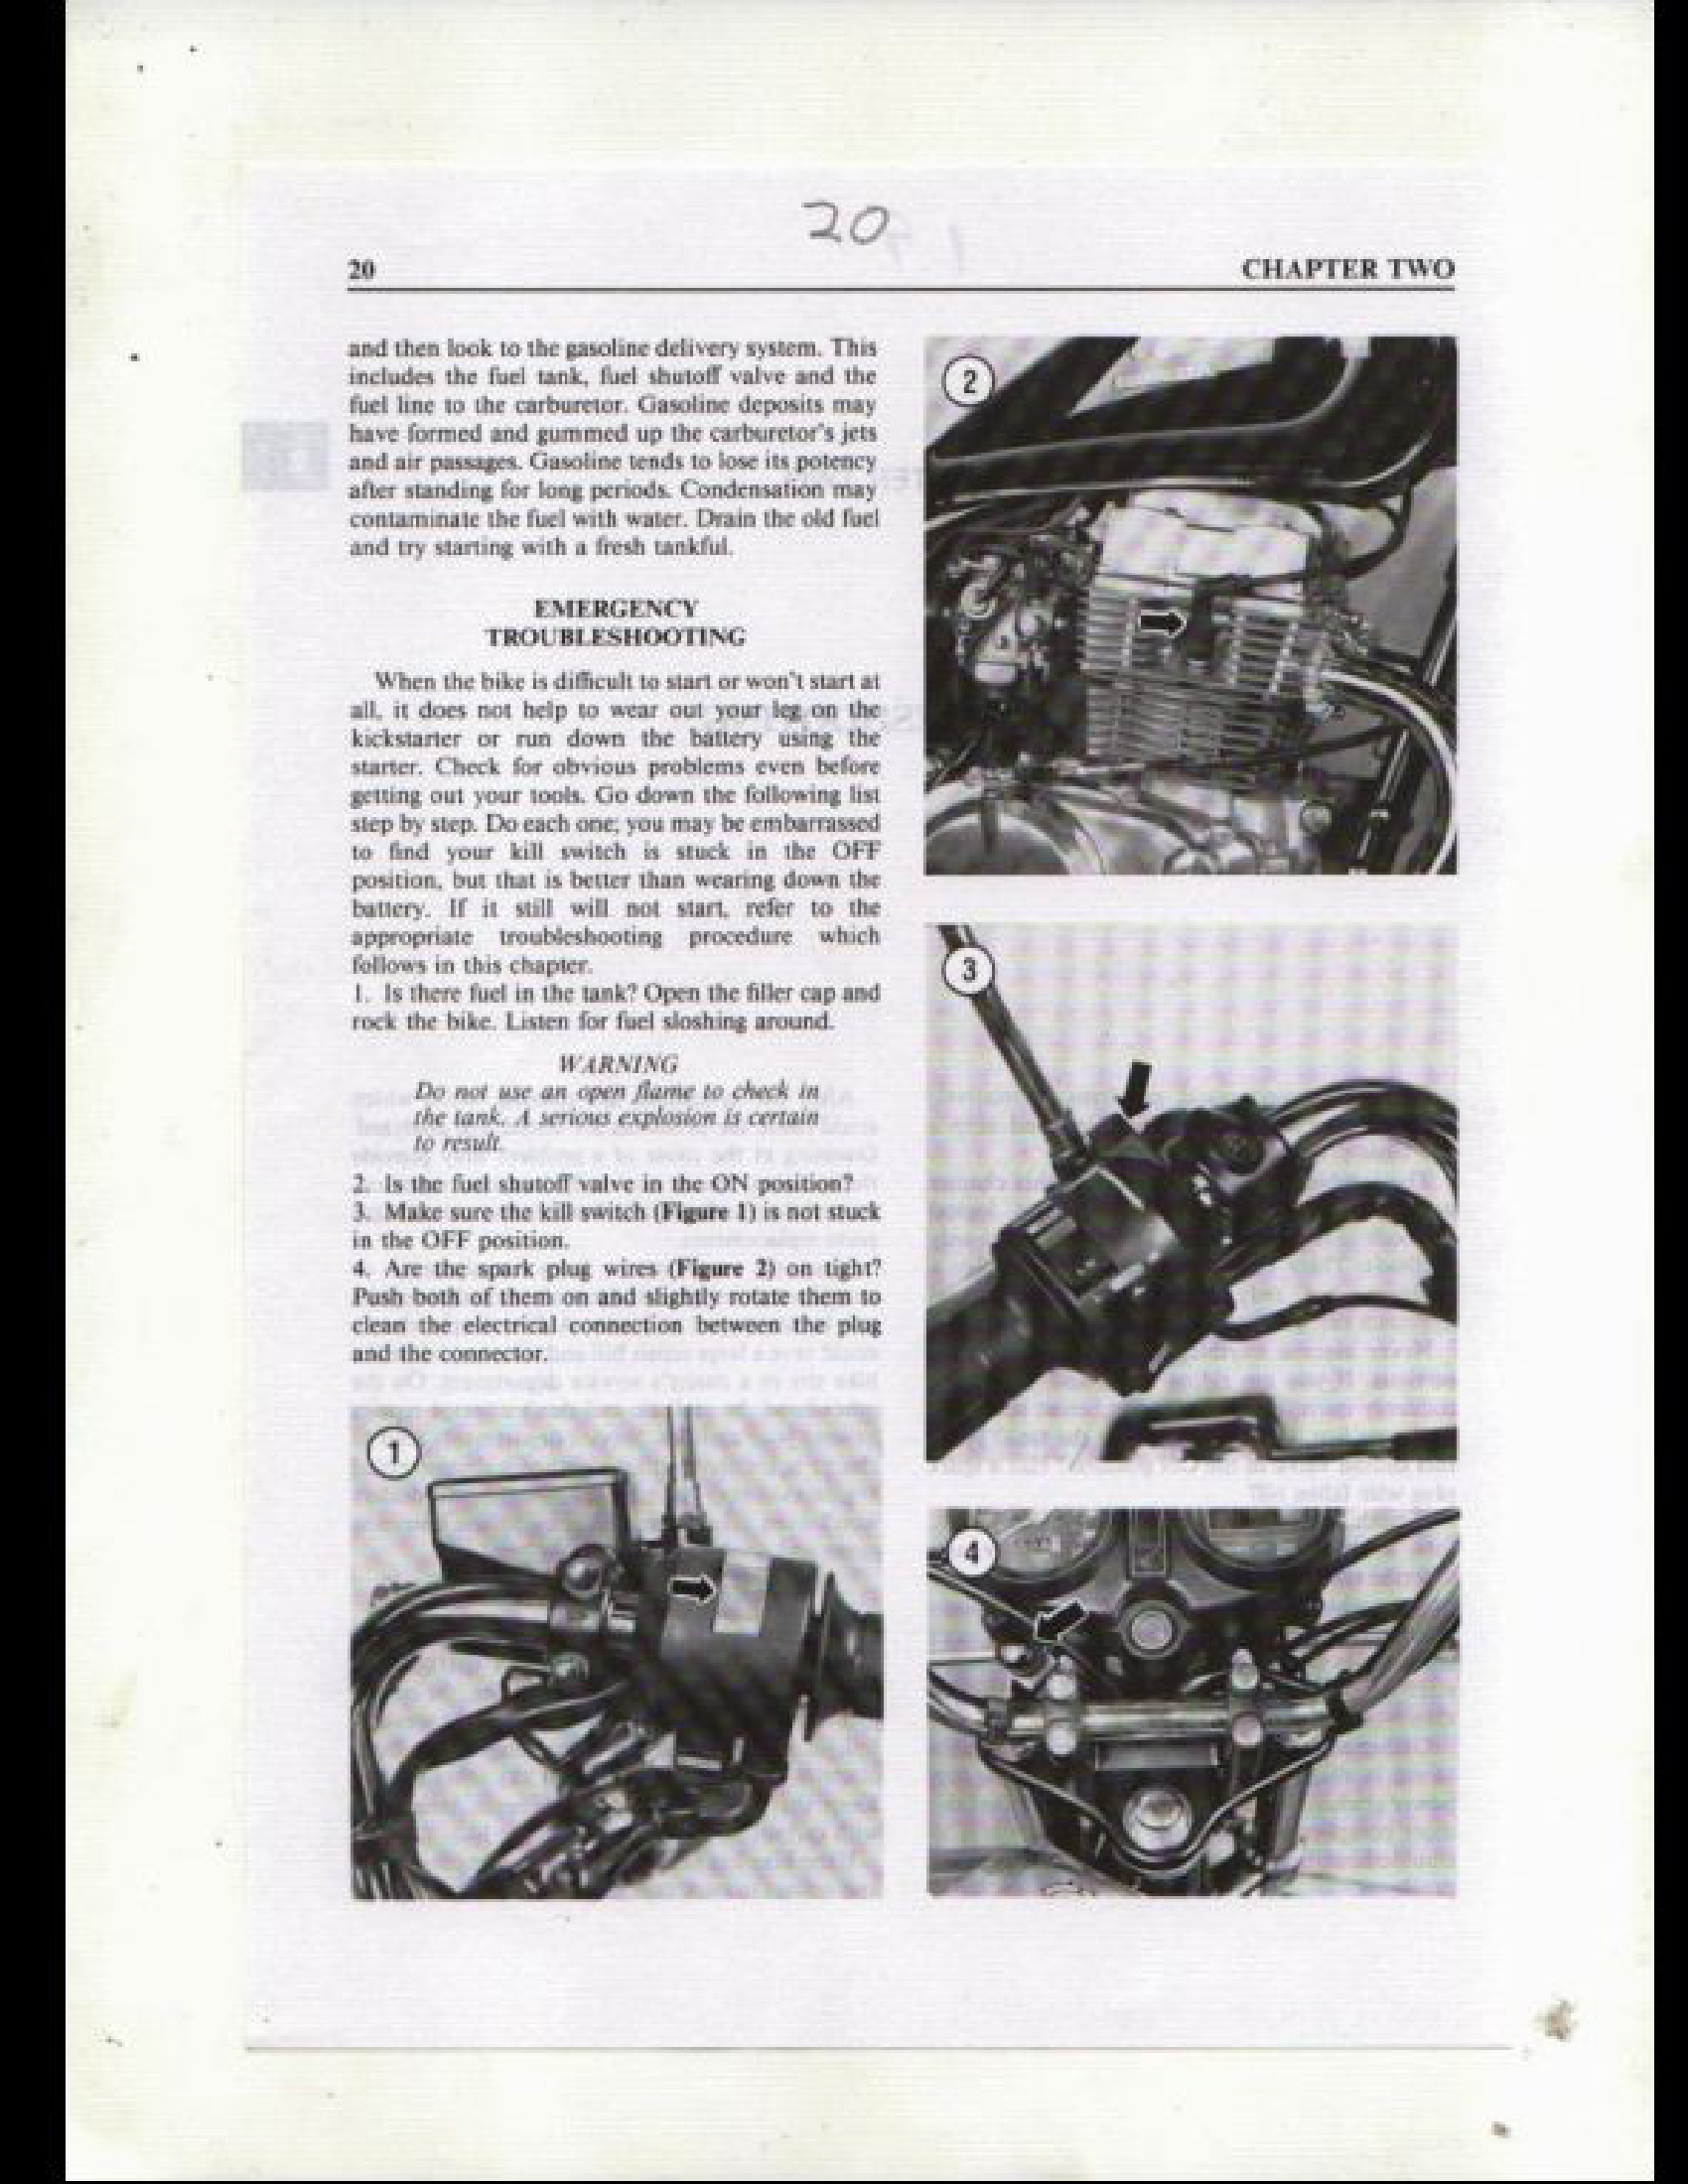 Honda 400-450cc Twins Motorcycle manual